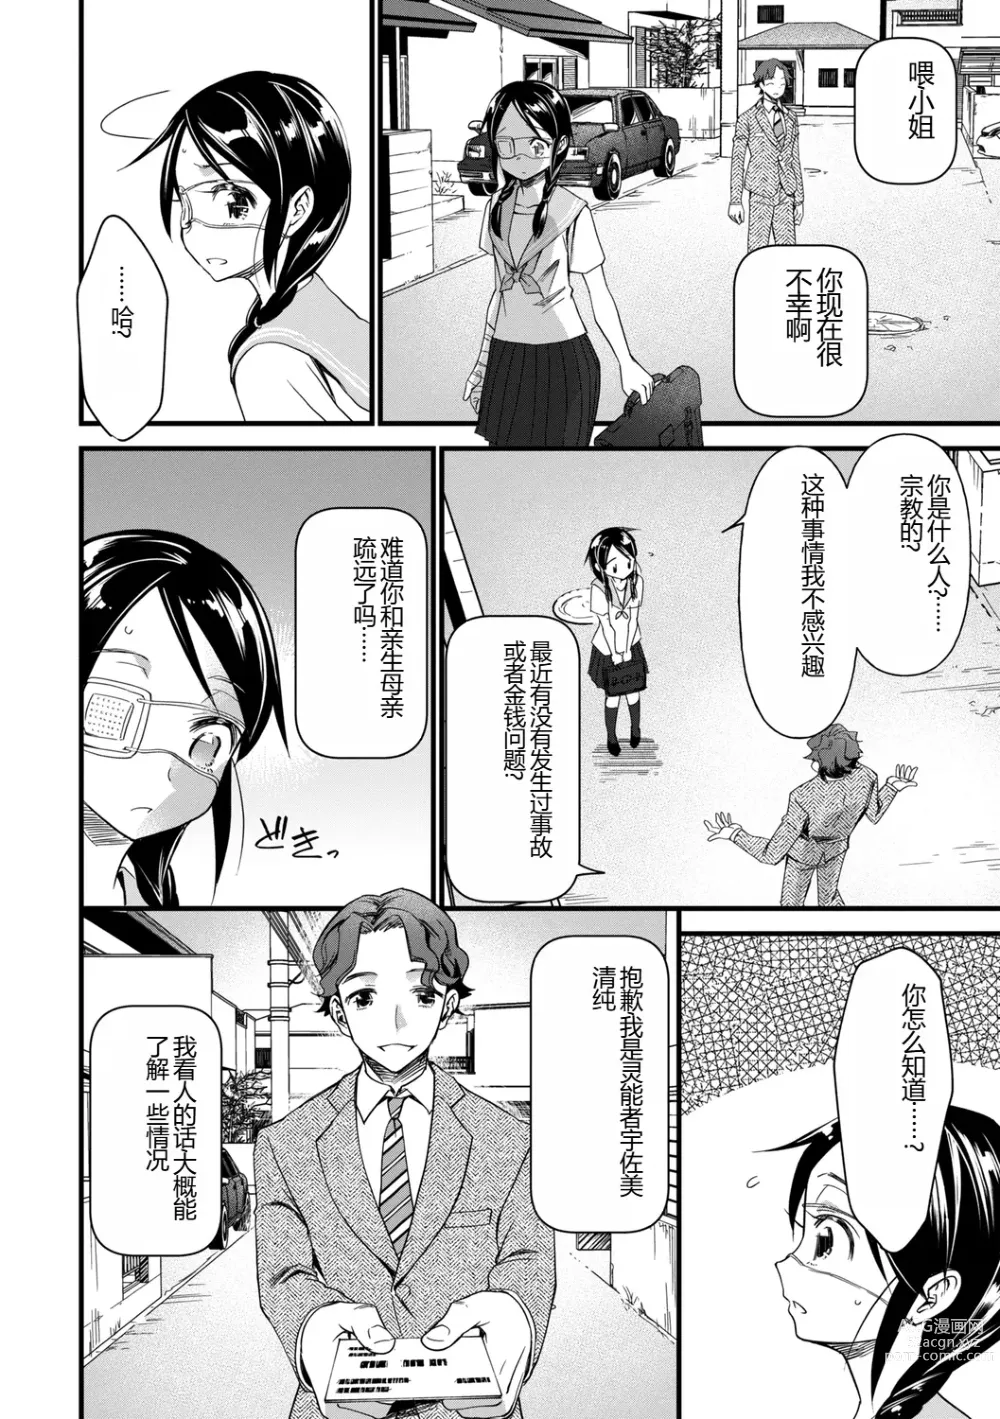 Page 10 of manga Nikugyaku Egoism